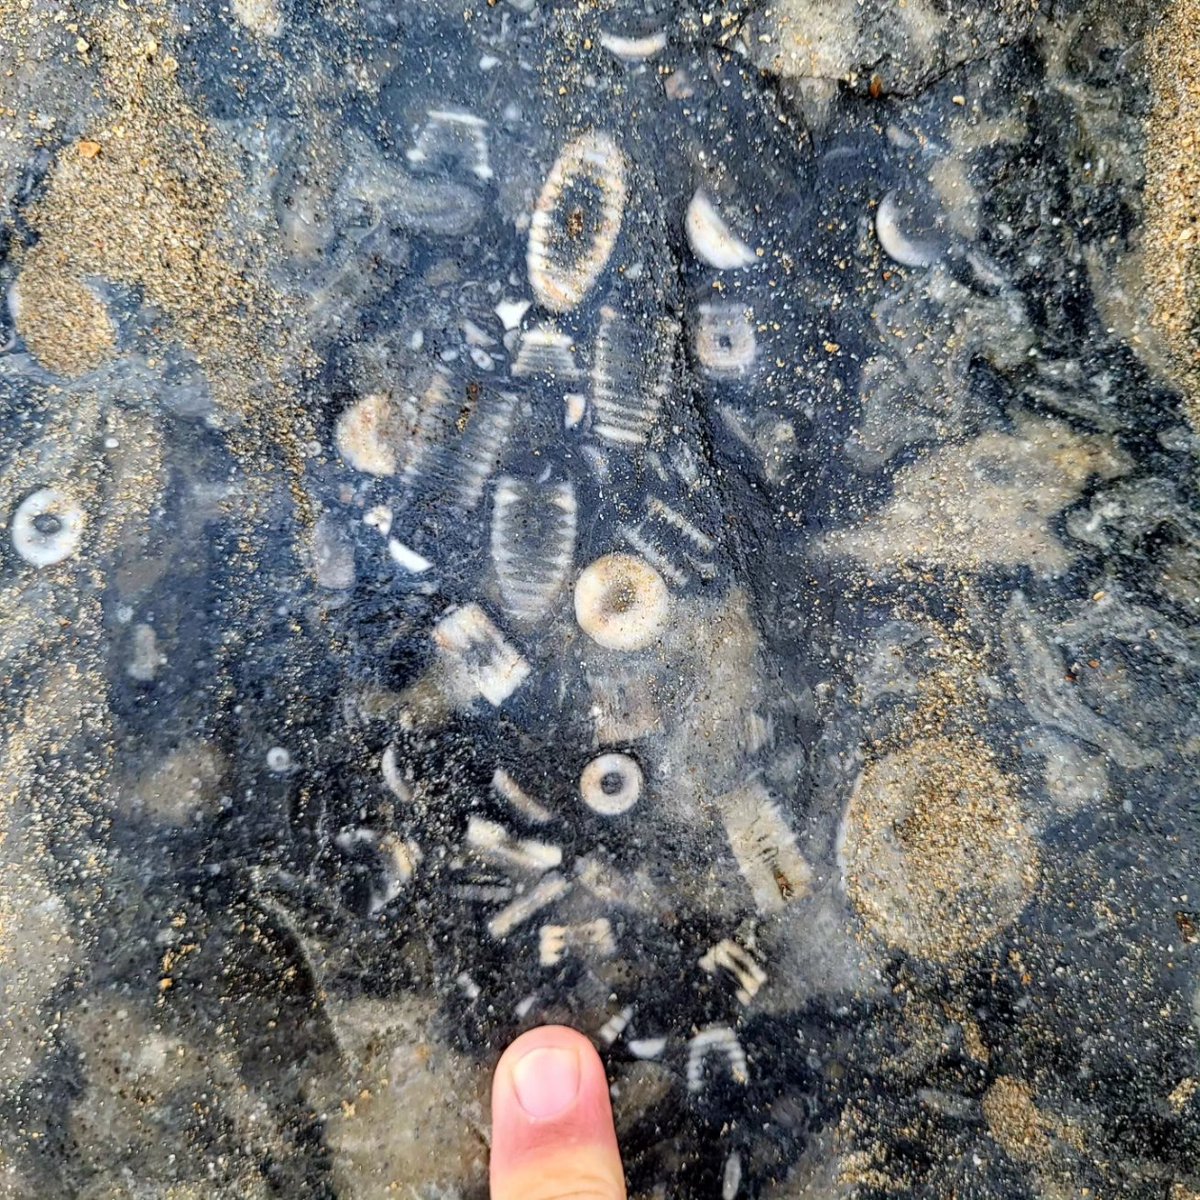 Ammonite and Crinoid fossils in the Ballybunion limestone. 
County Kerry, Ireland.